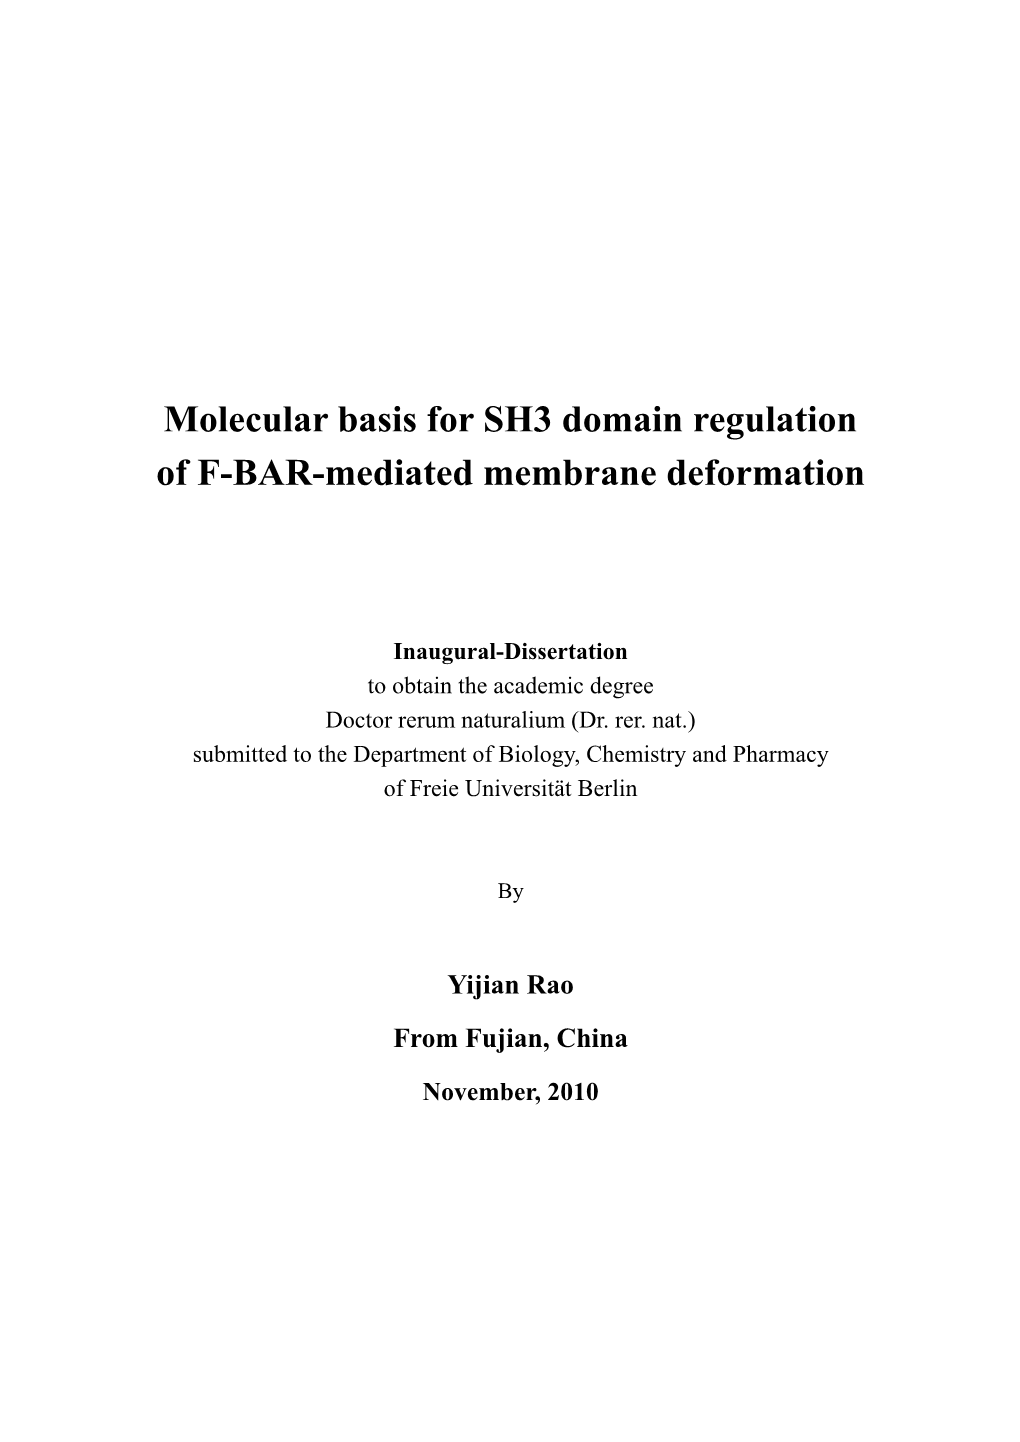 Molecular Basis for SH3 Domain Regulation of F-BAR-Mediated Membrane Deformation